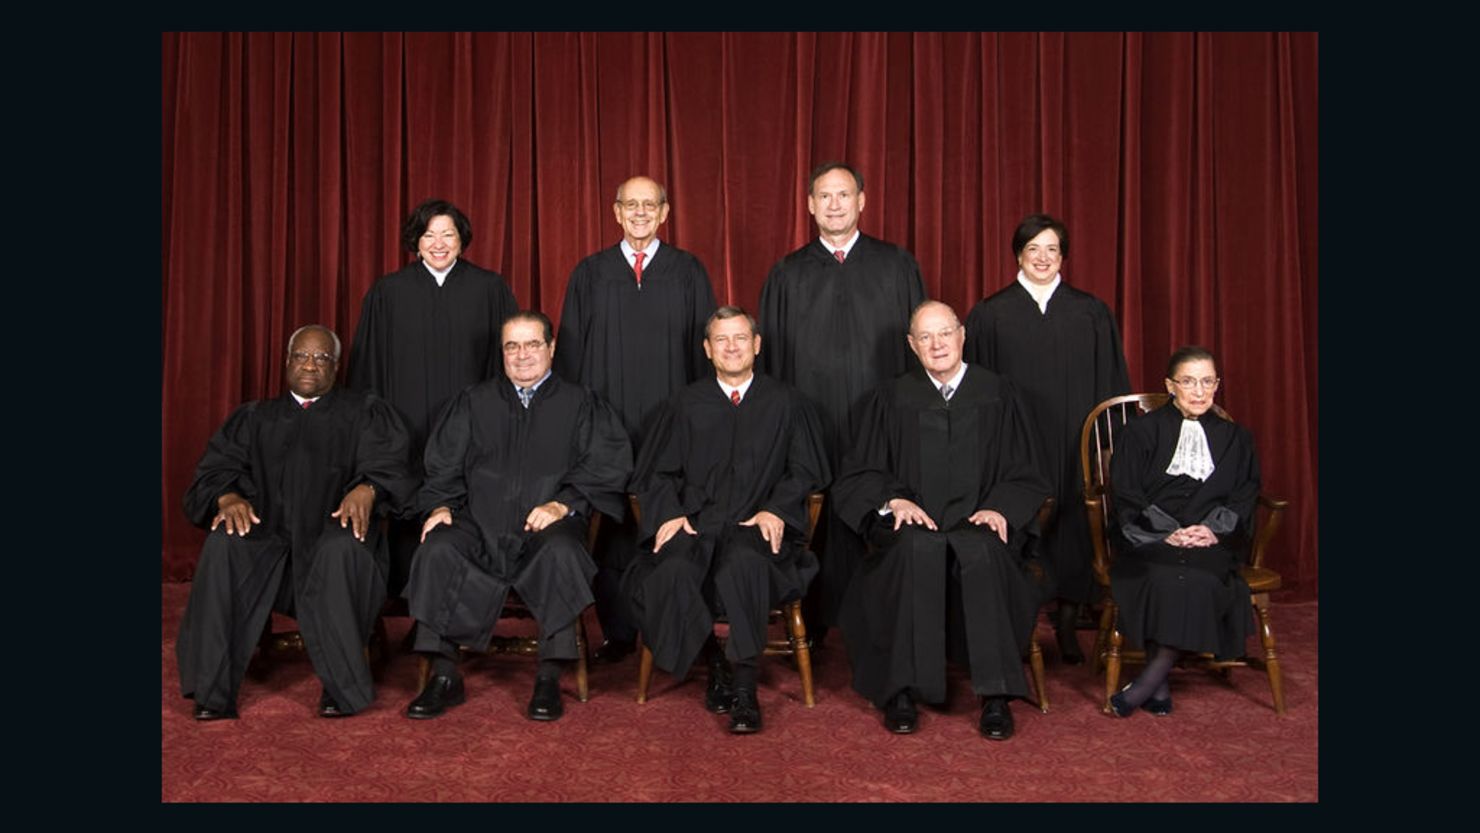 The nine U.S. Supreme Court justices.